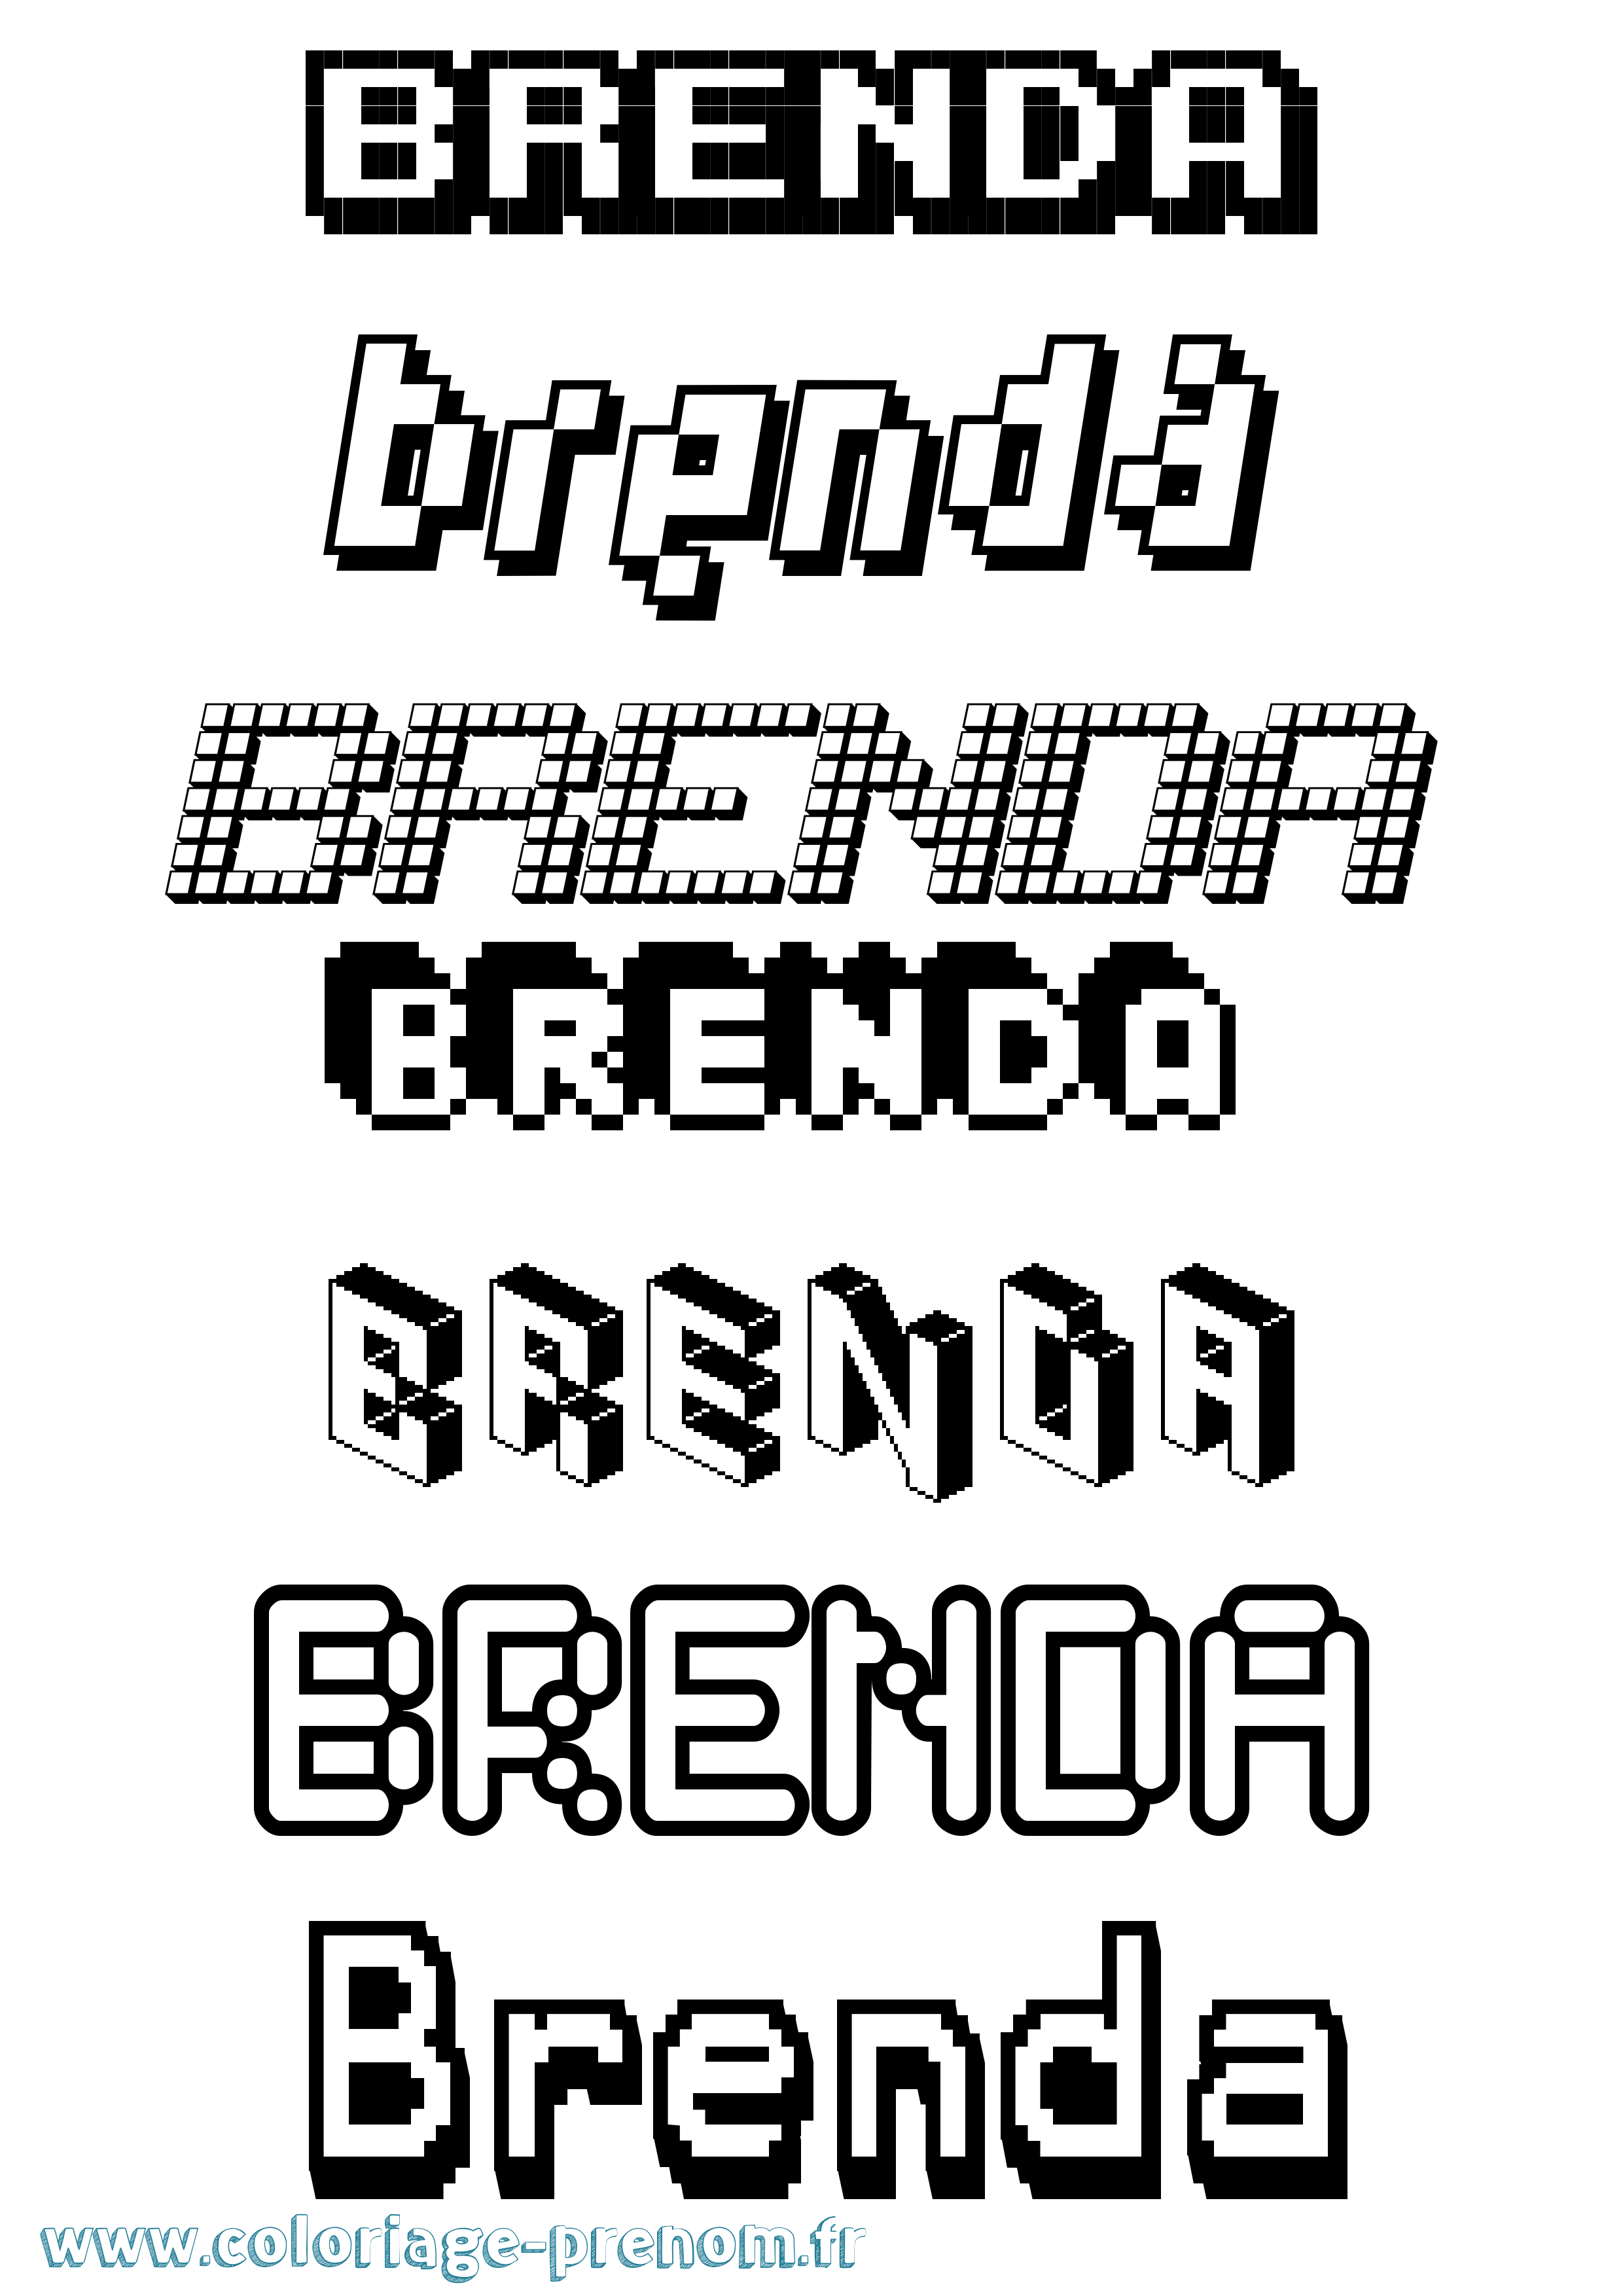 Coloriage prénom Brenda Pixel